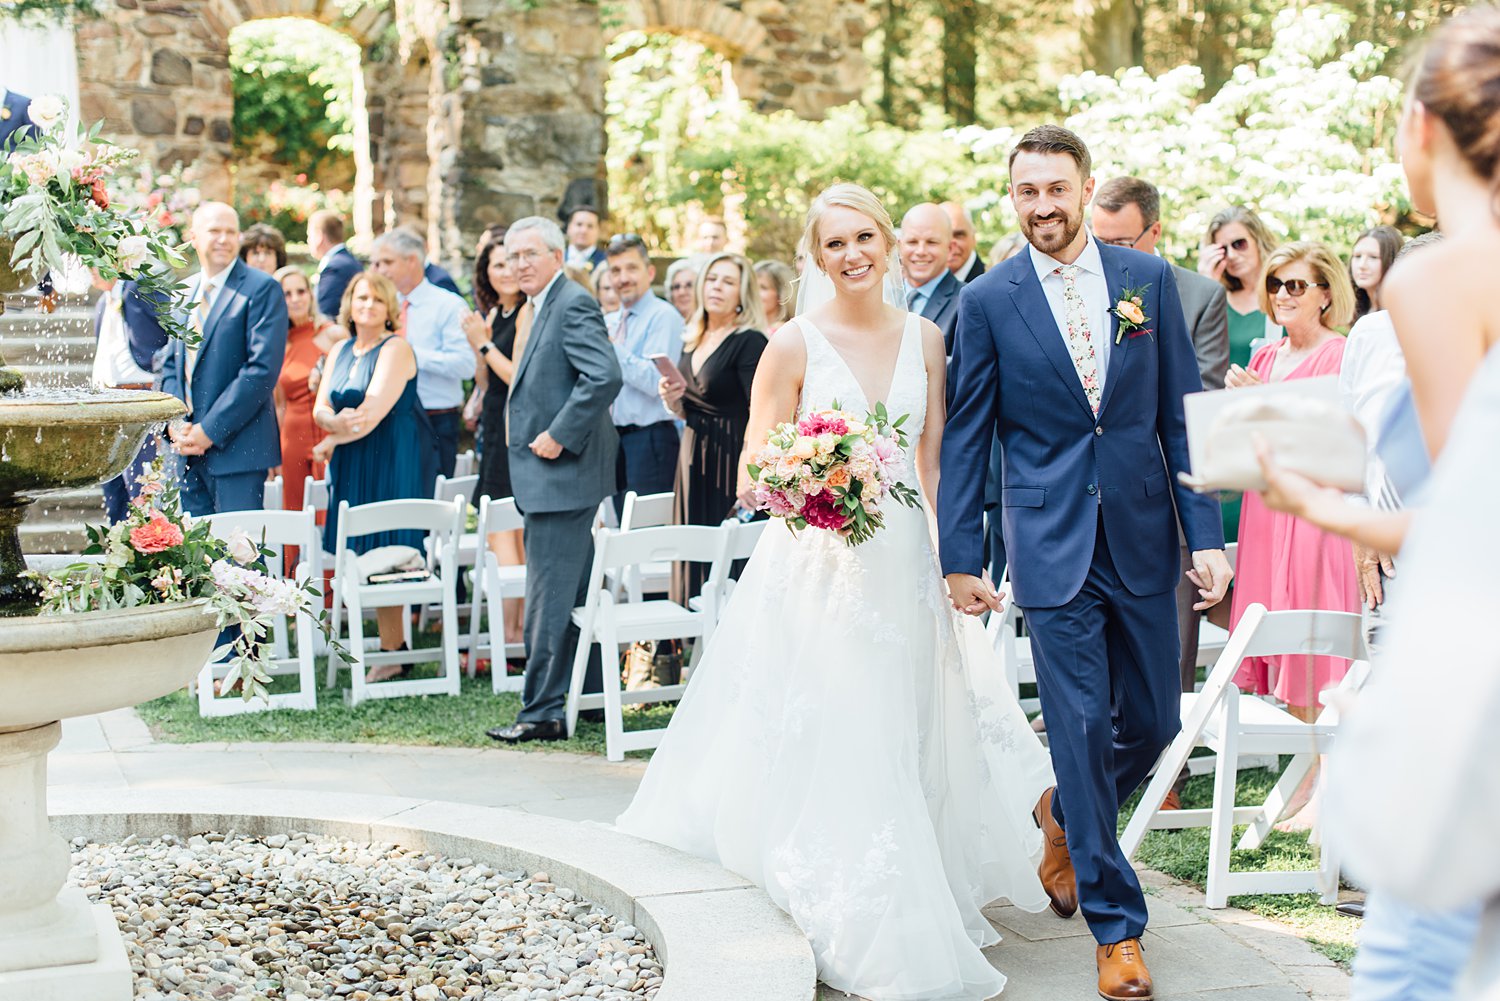 Kaitlyn + Tyler - Ridley Creek State Park Wedding - Ridley Creek Wedding Photographer - Alison Dunn Photography photo